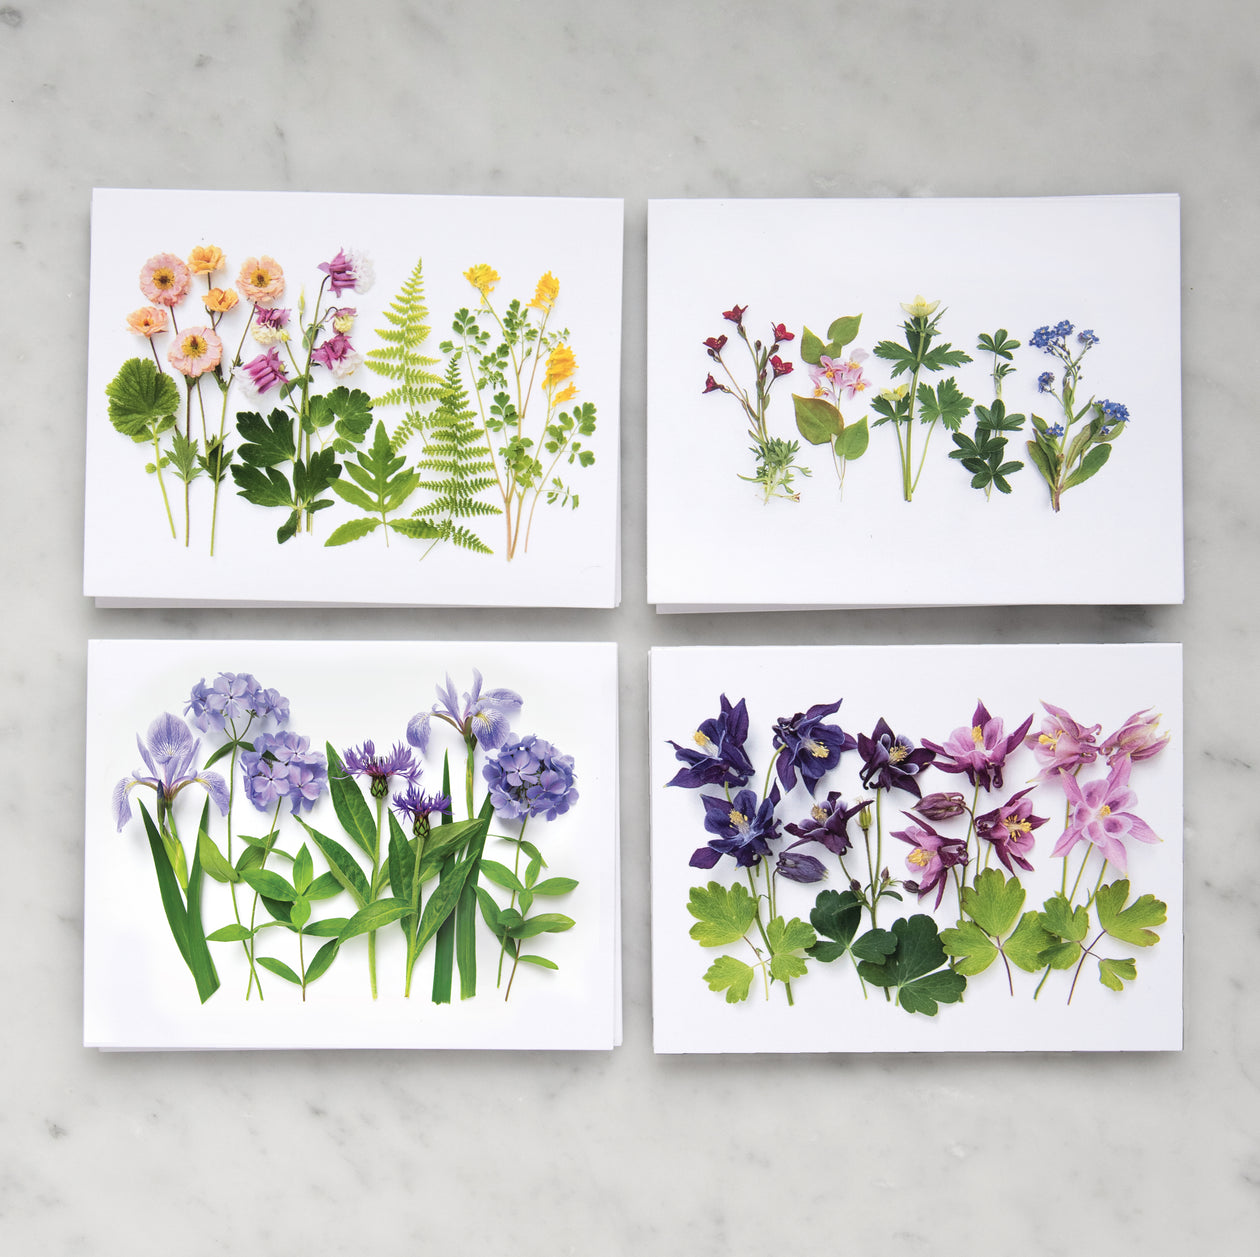 Card set - Spring Wildflowers